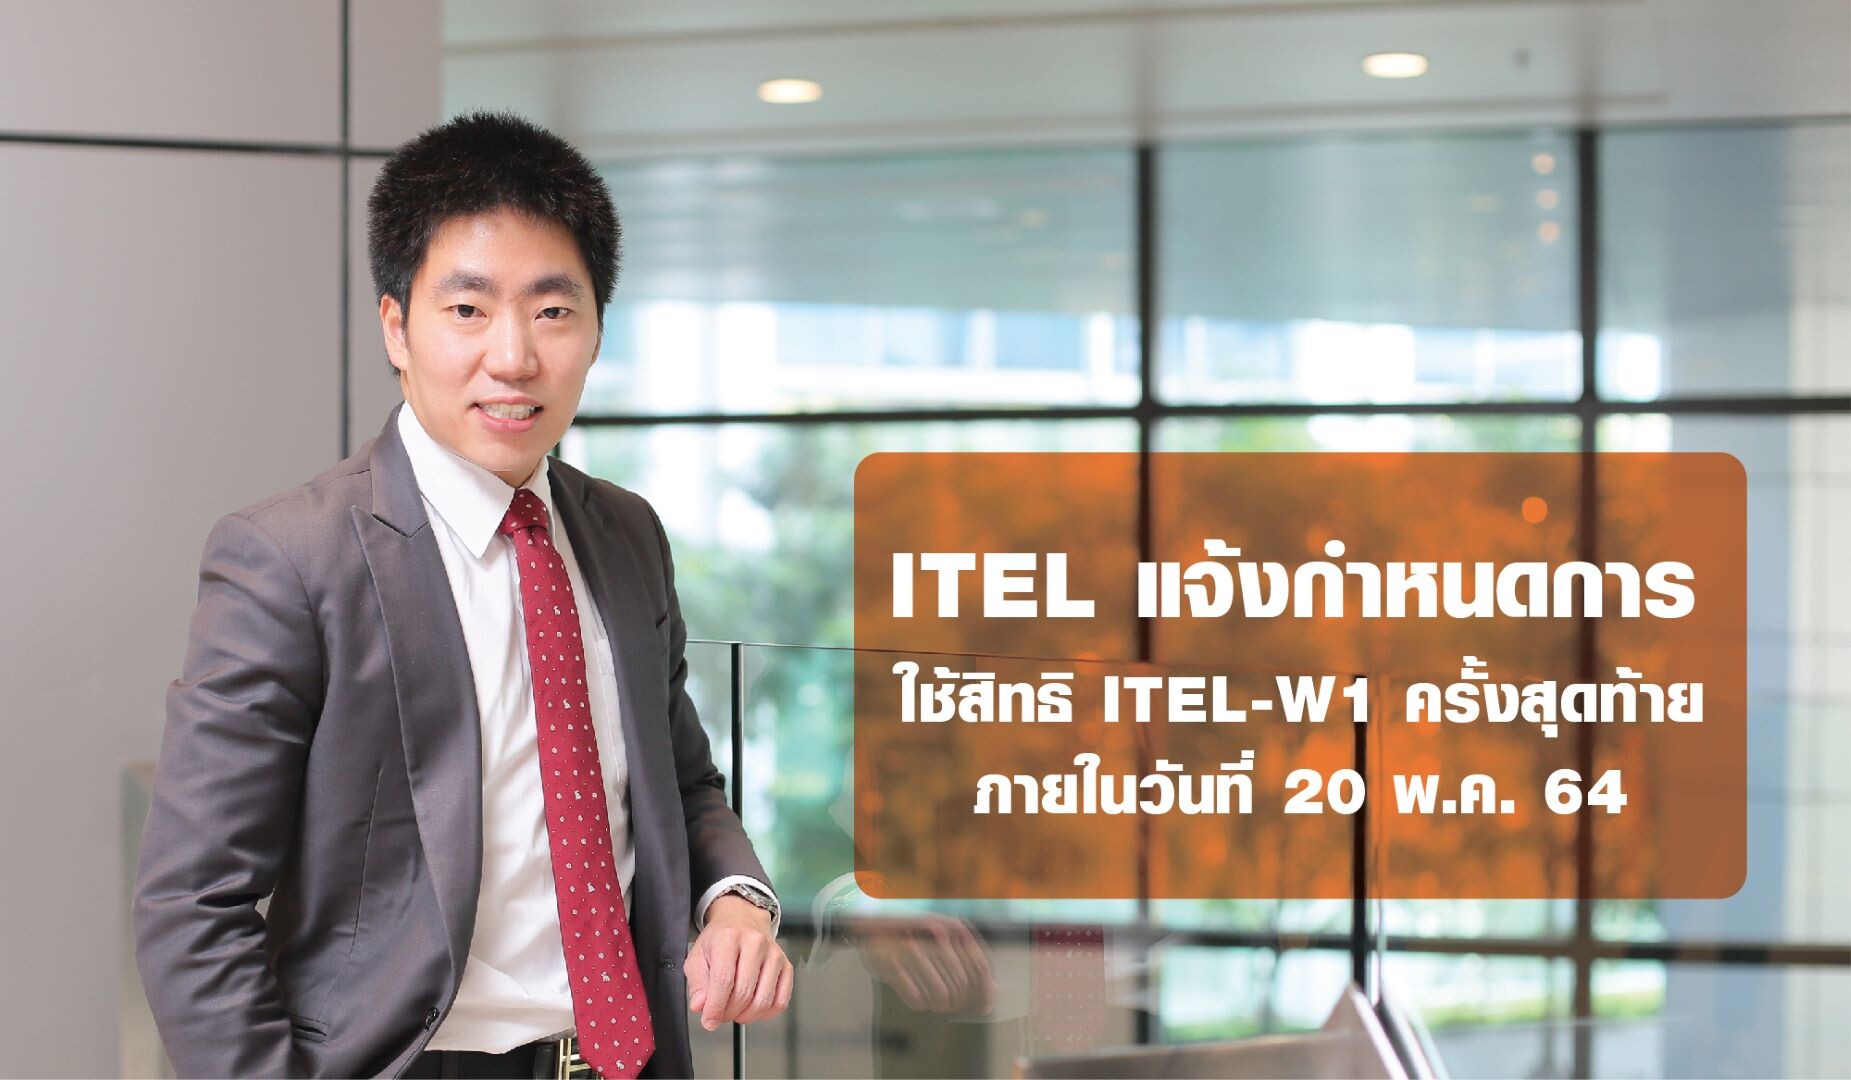 ITEL แจ้งกำหนดการใช้สิทธิ ITEL-W1ครั้งสุดท้าย ภายในวันที่ 20 พ.ค. 64